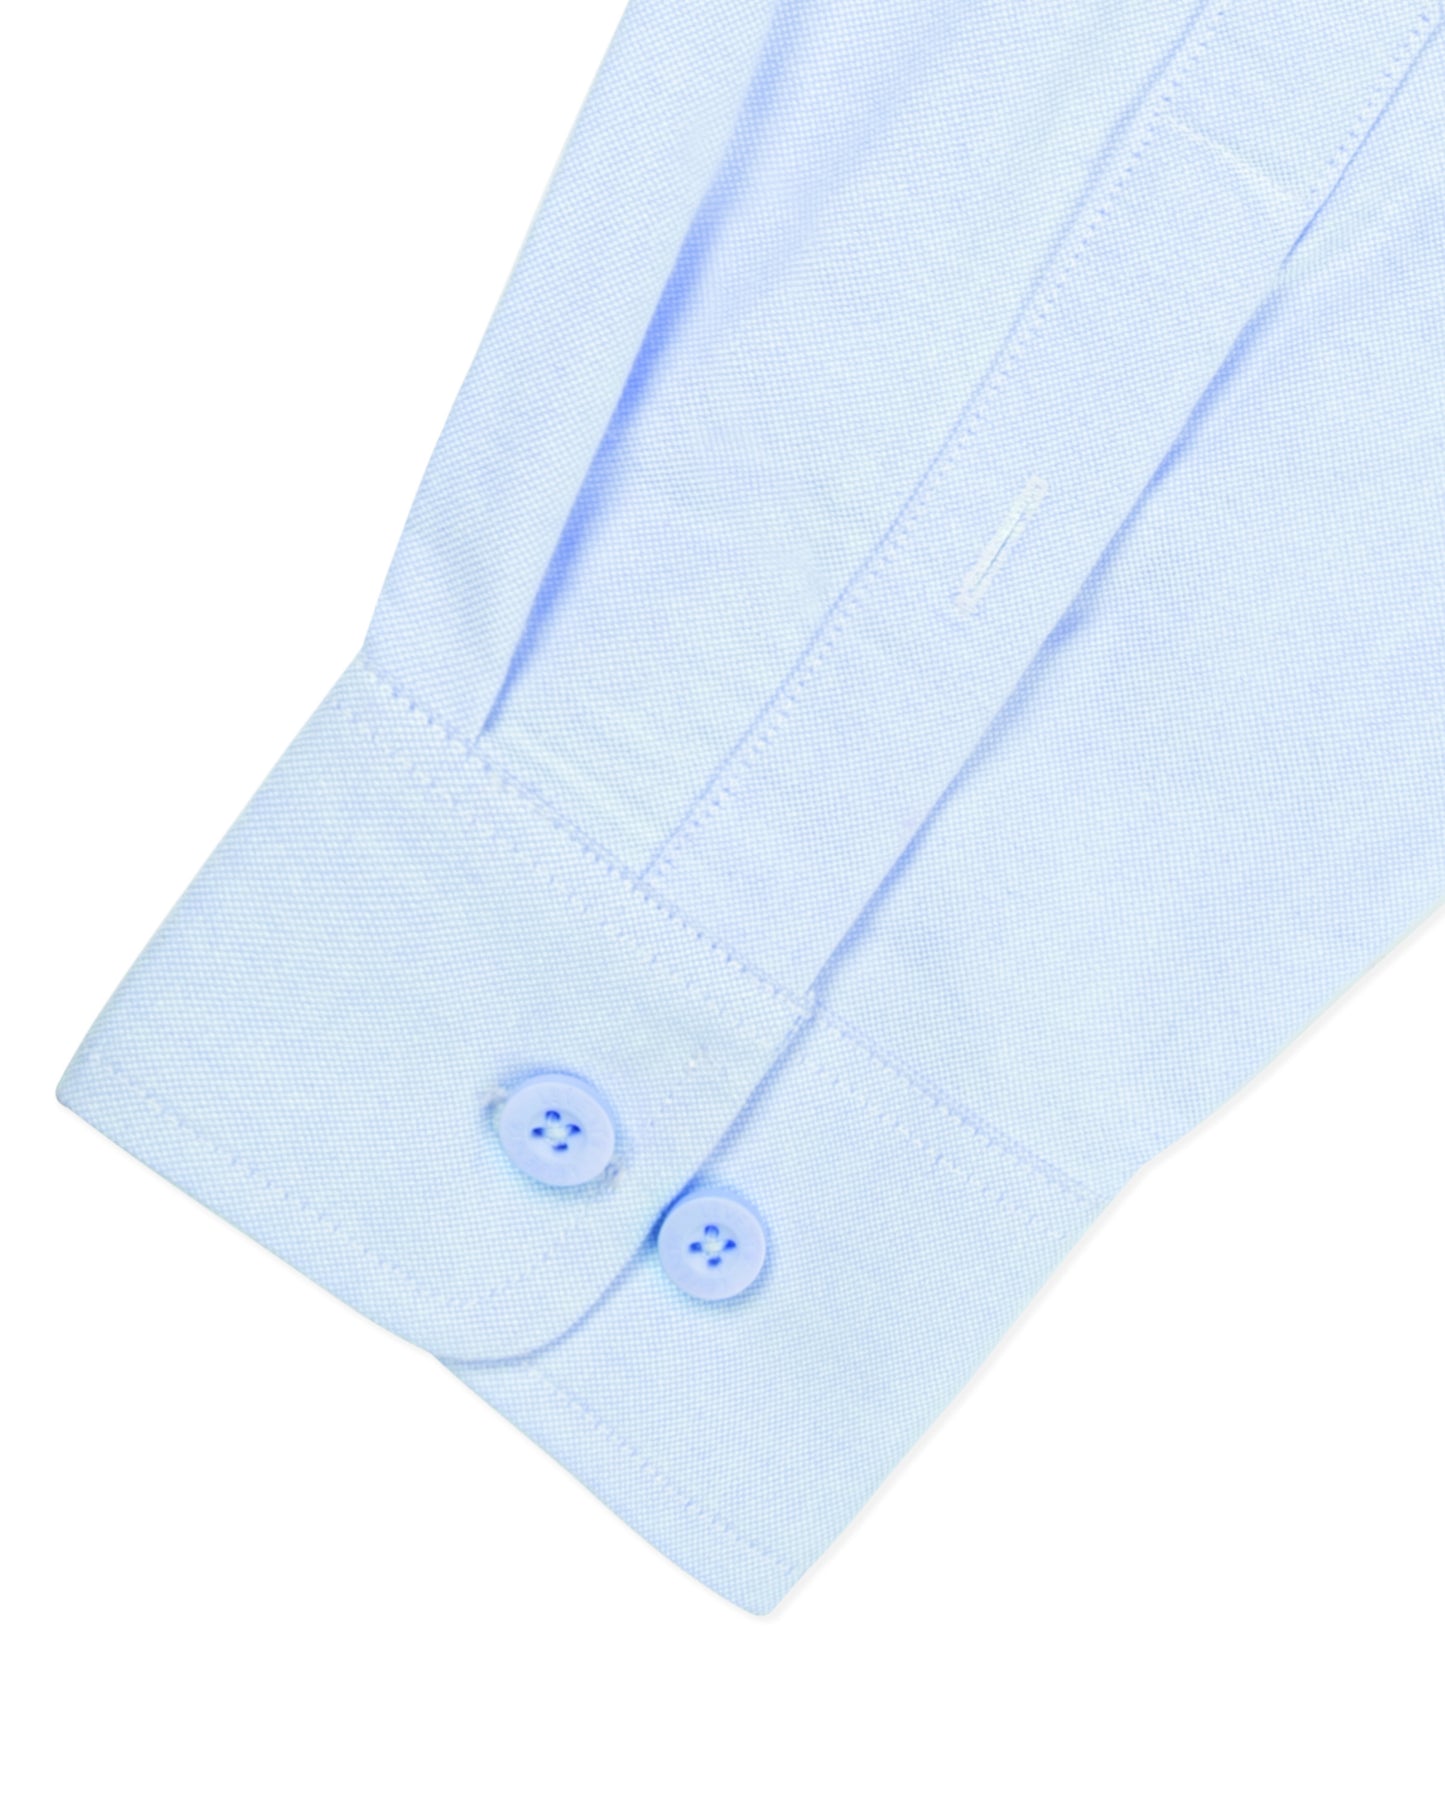 Levents® Classic Long Sleeve Shirt/ Blue